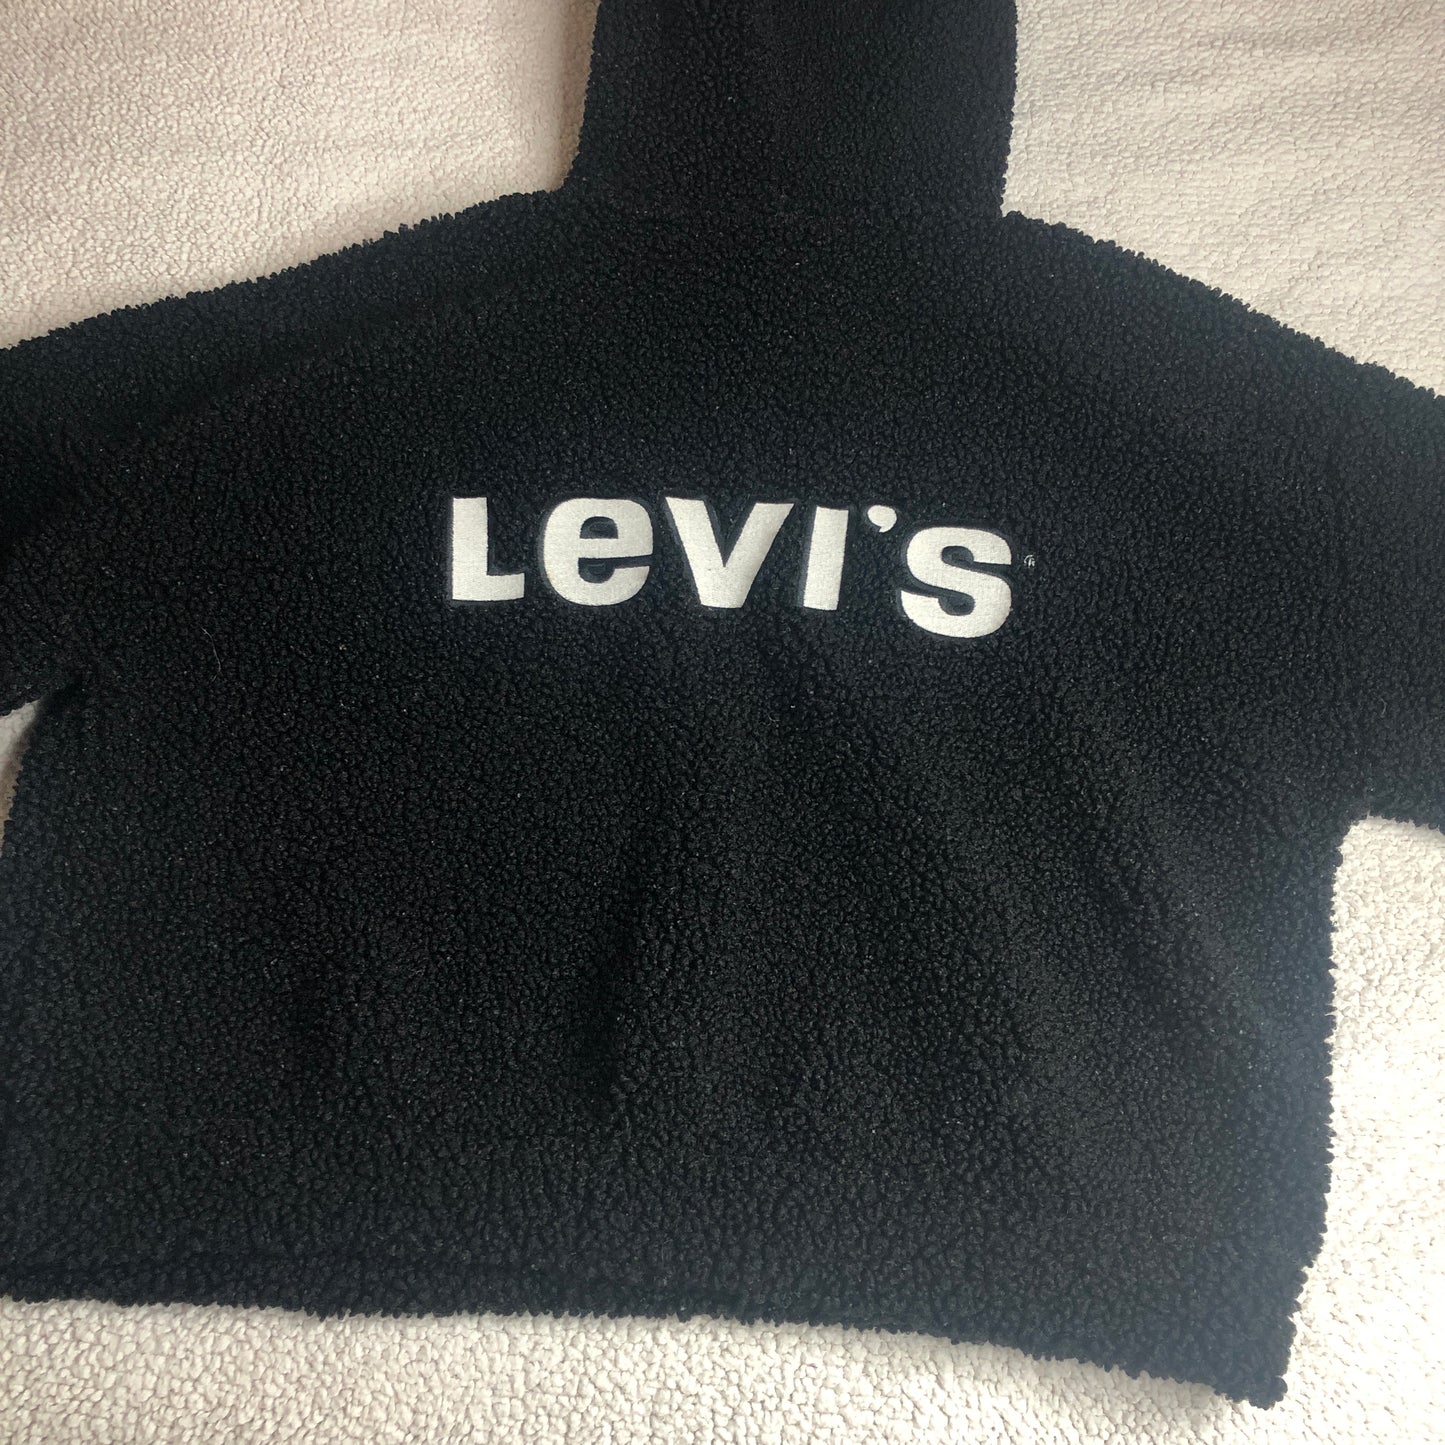 Levi's Anna sherpa teddy black hoodie embroidered logo warm cozy